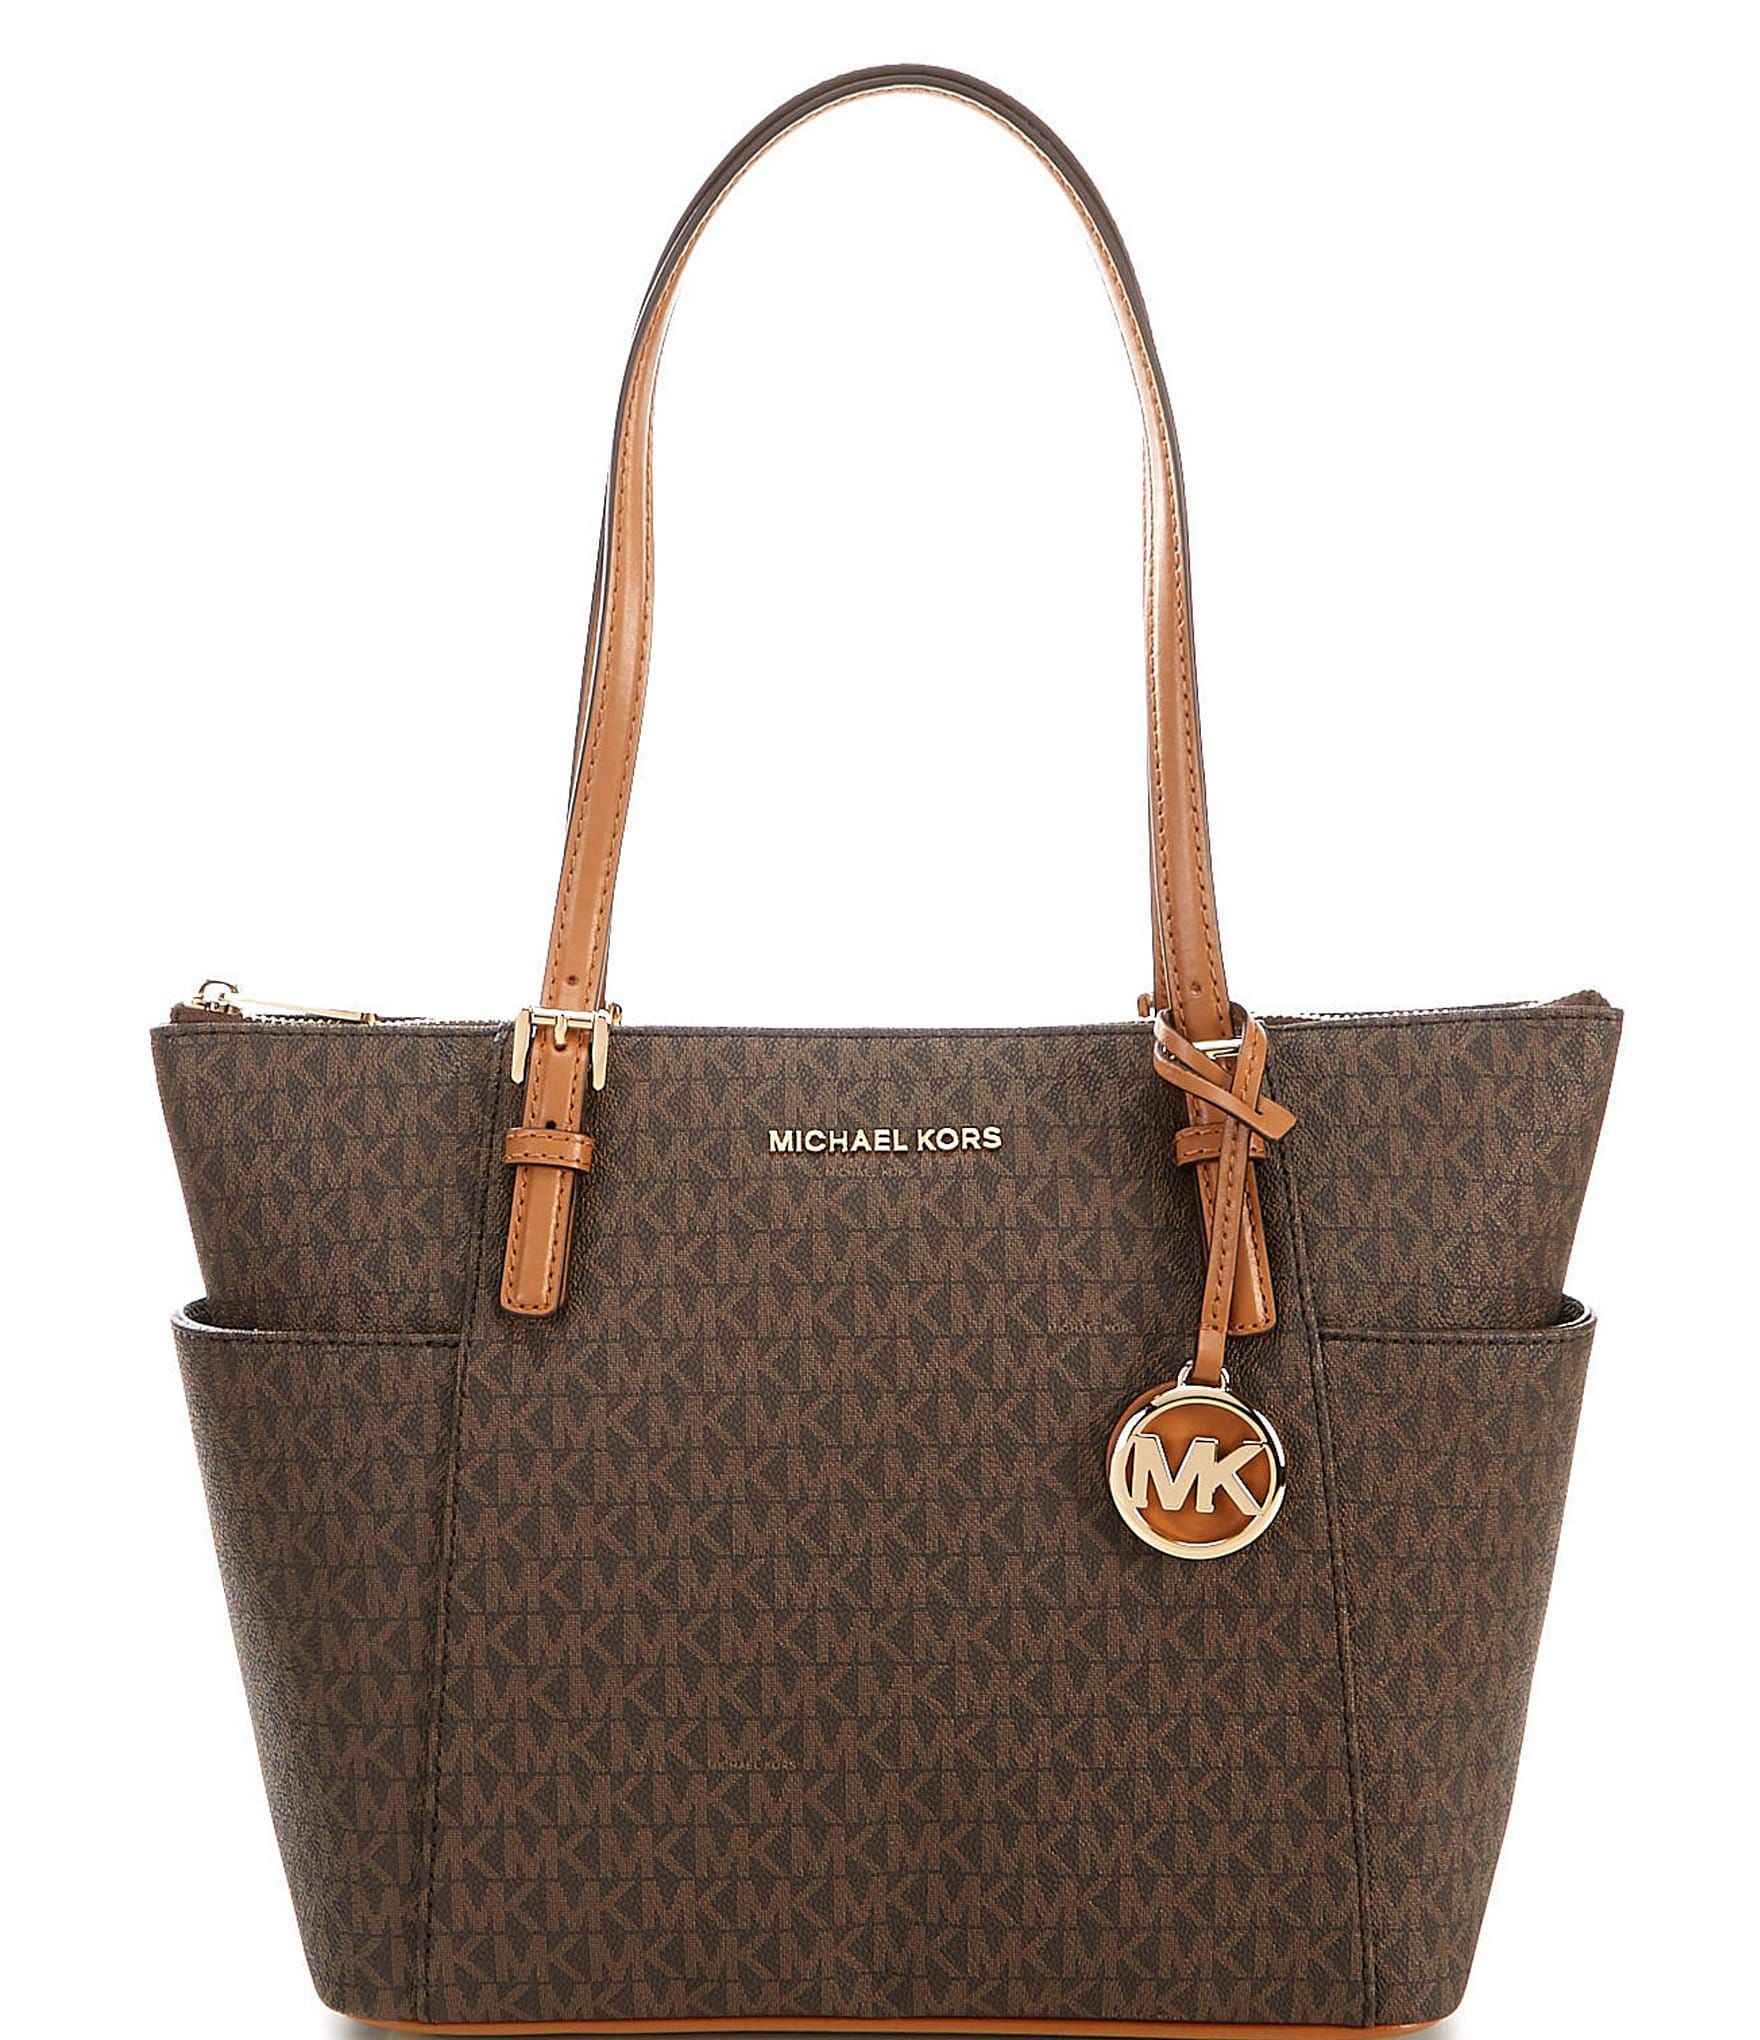 mk purses for sale